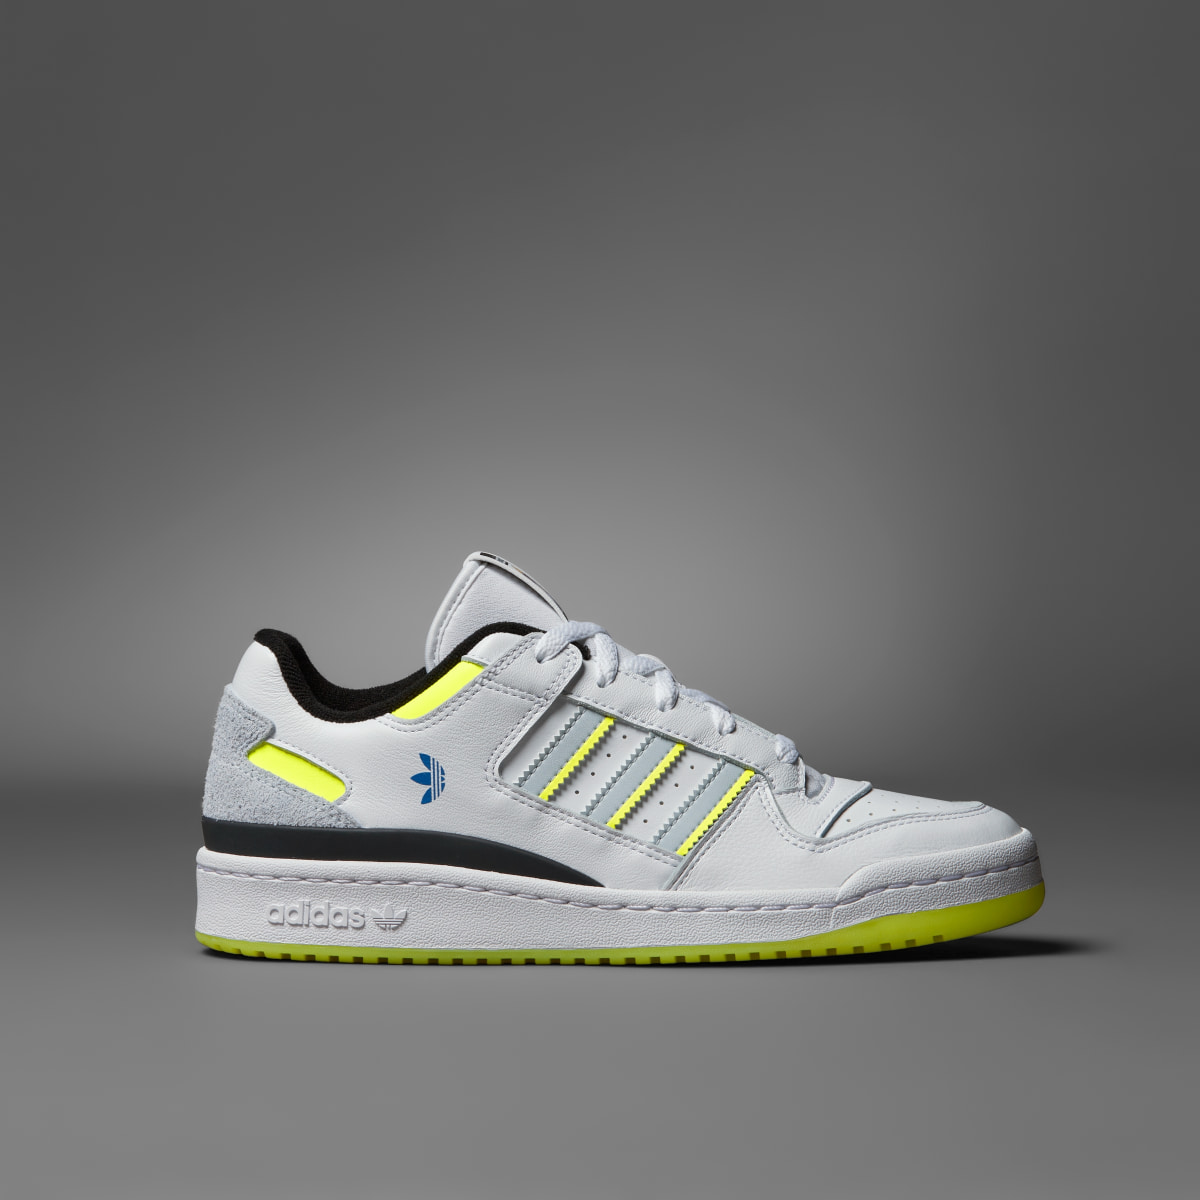 Adidas Forum Low CL x Indigo Herz Shoes. 4